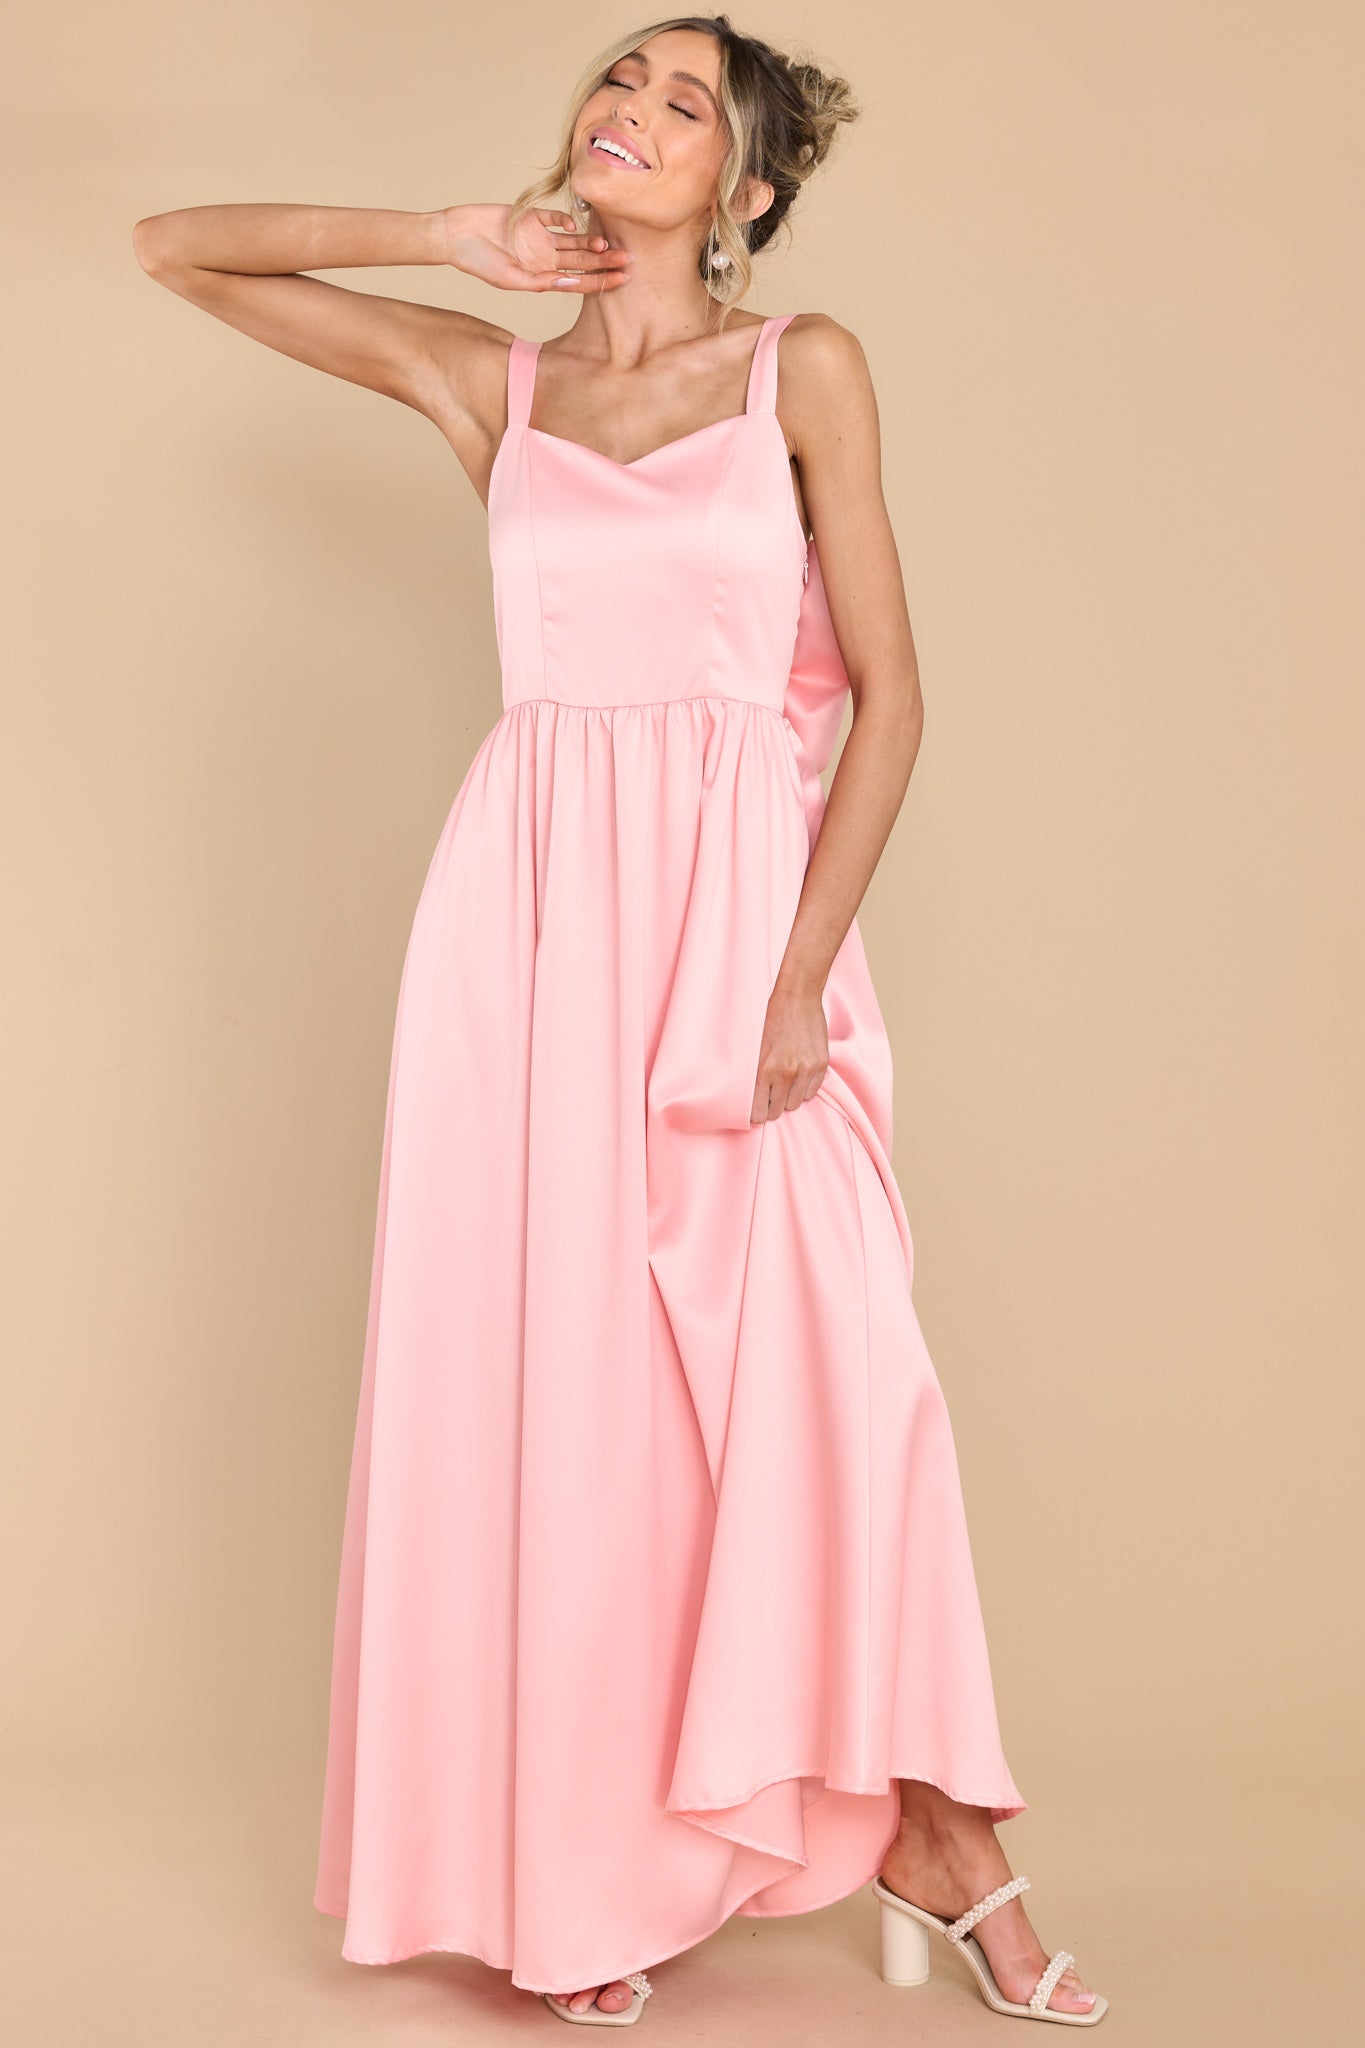 Call My Name Blush Pink Backless Maxi Dress